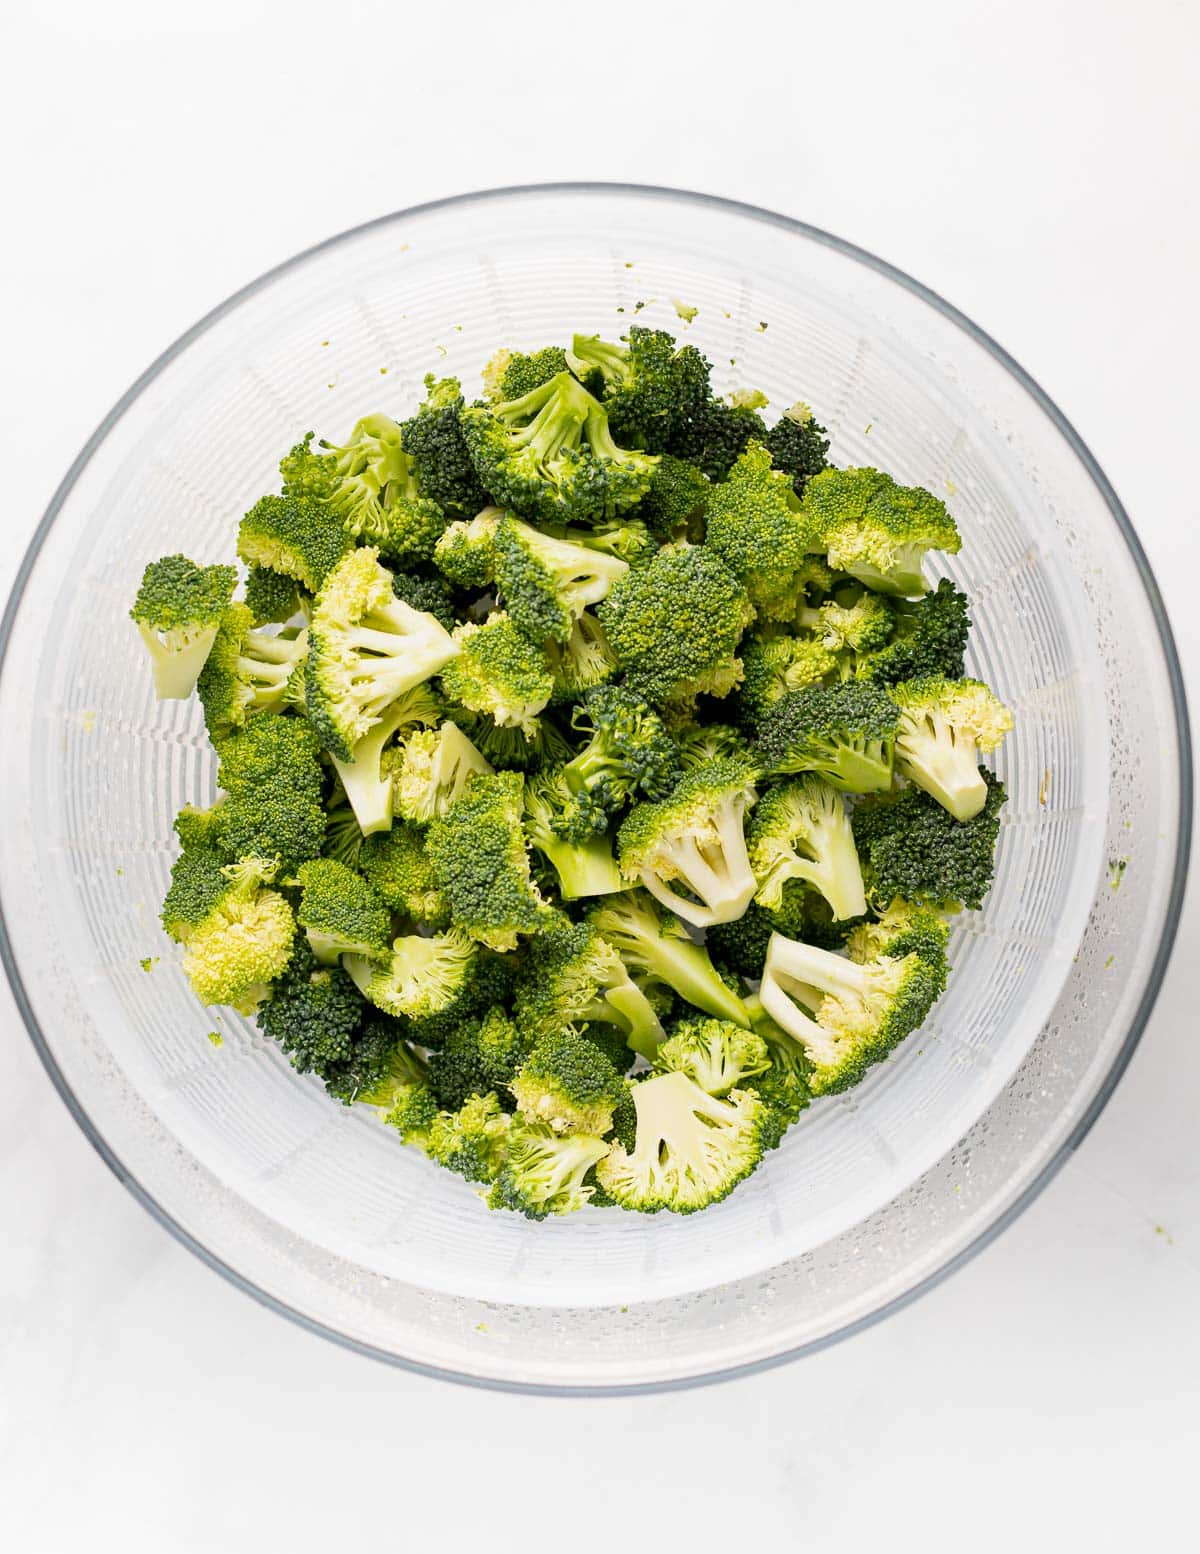 a bowl of broccoli florets